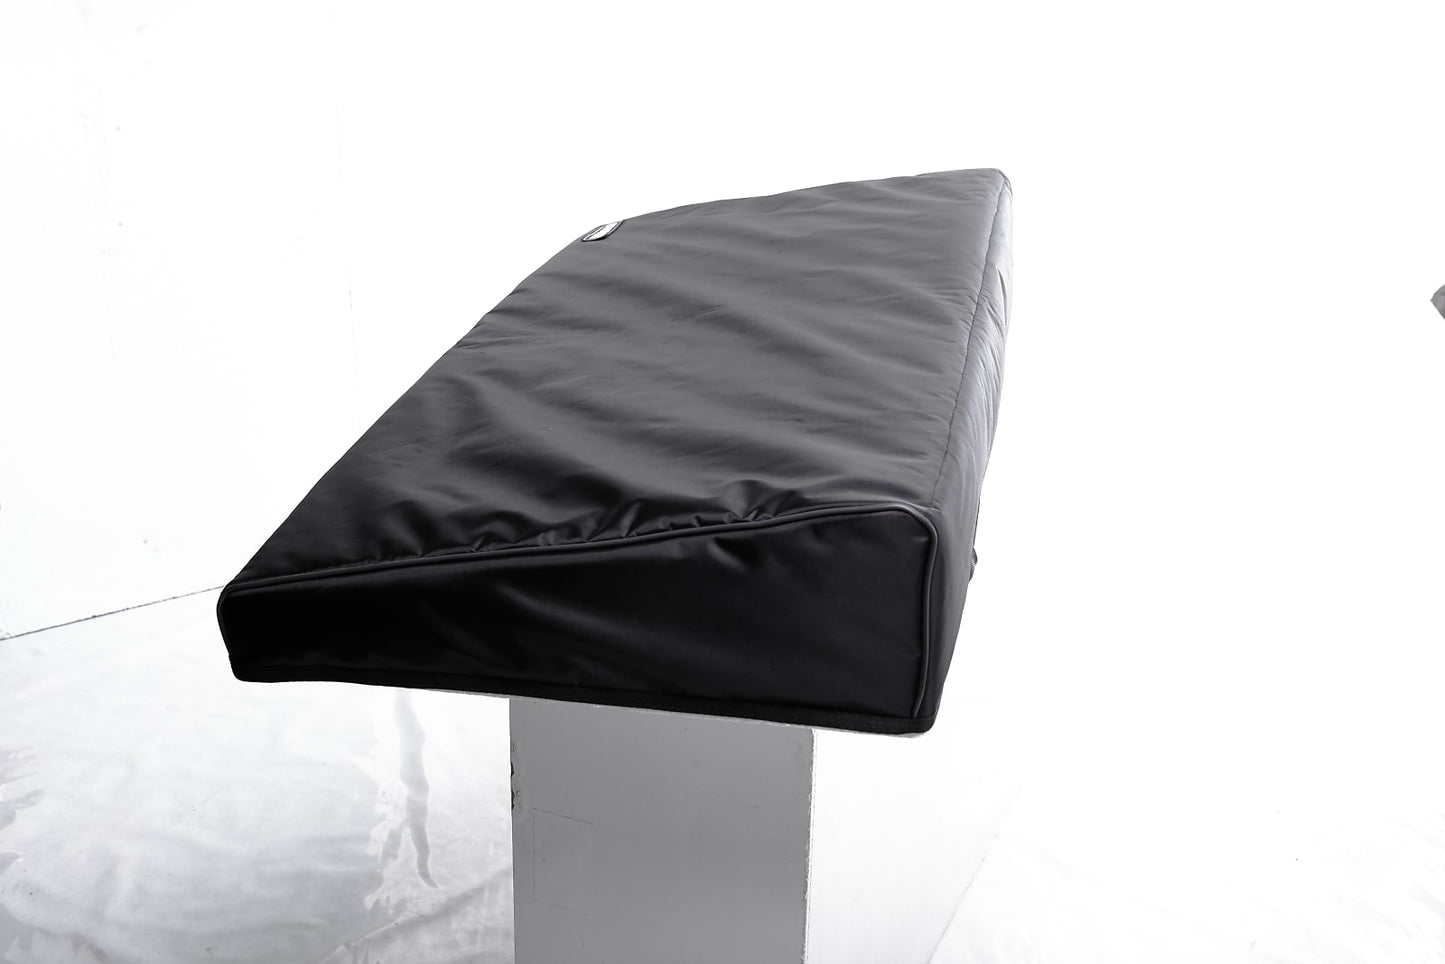 Custom padded cover for MOOG MiniMoog Voyager XL